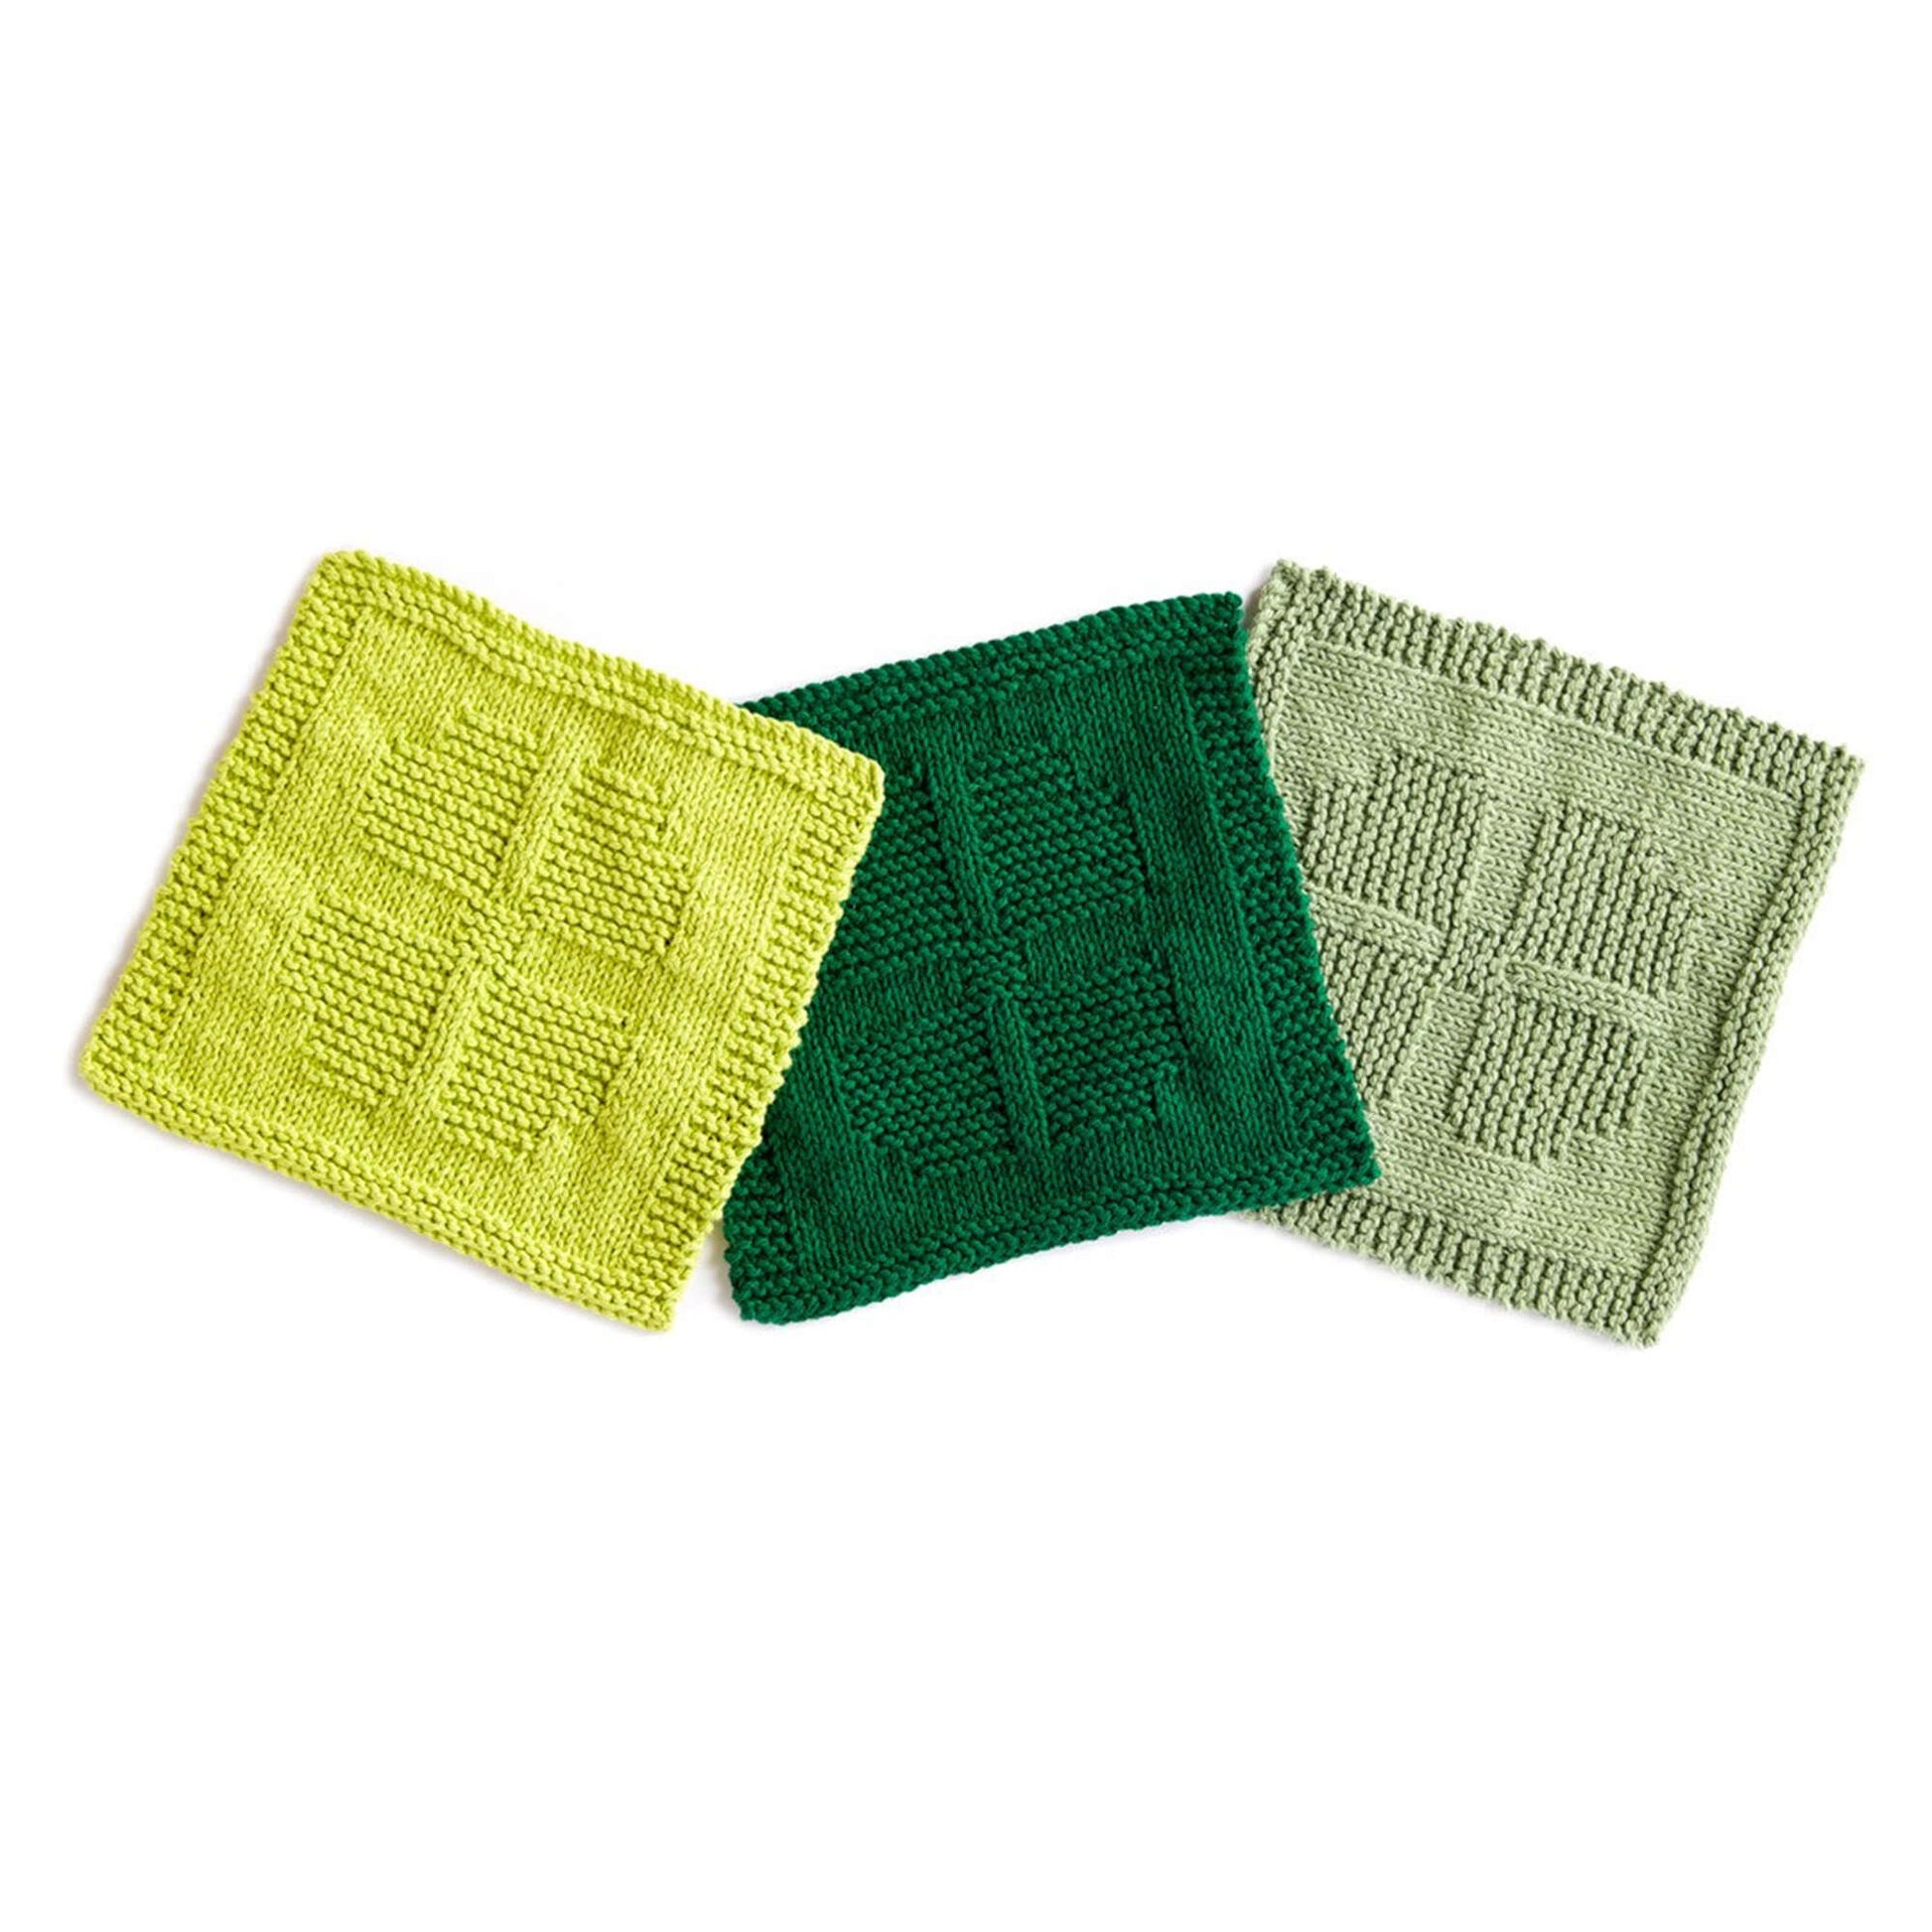 Free Lily Sugar'n Cream Lucky Charm Knit Dishcloth Pattern